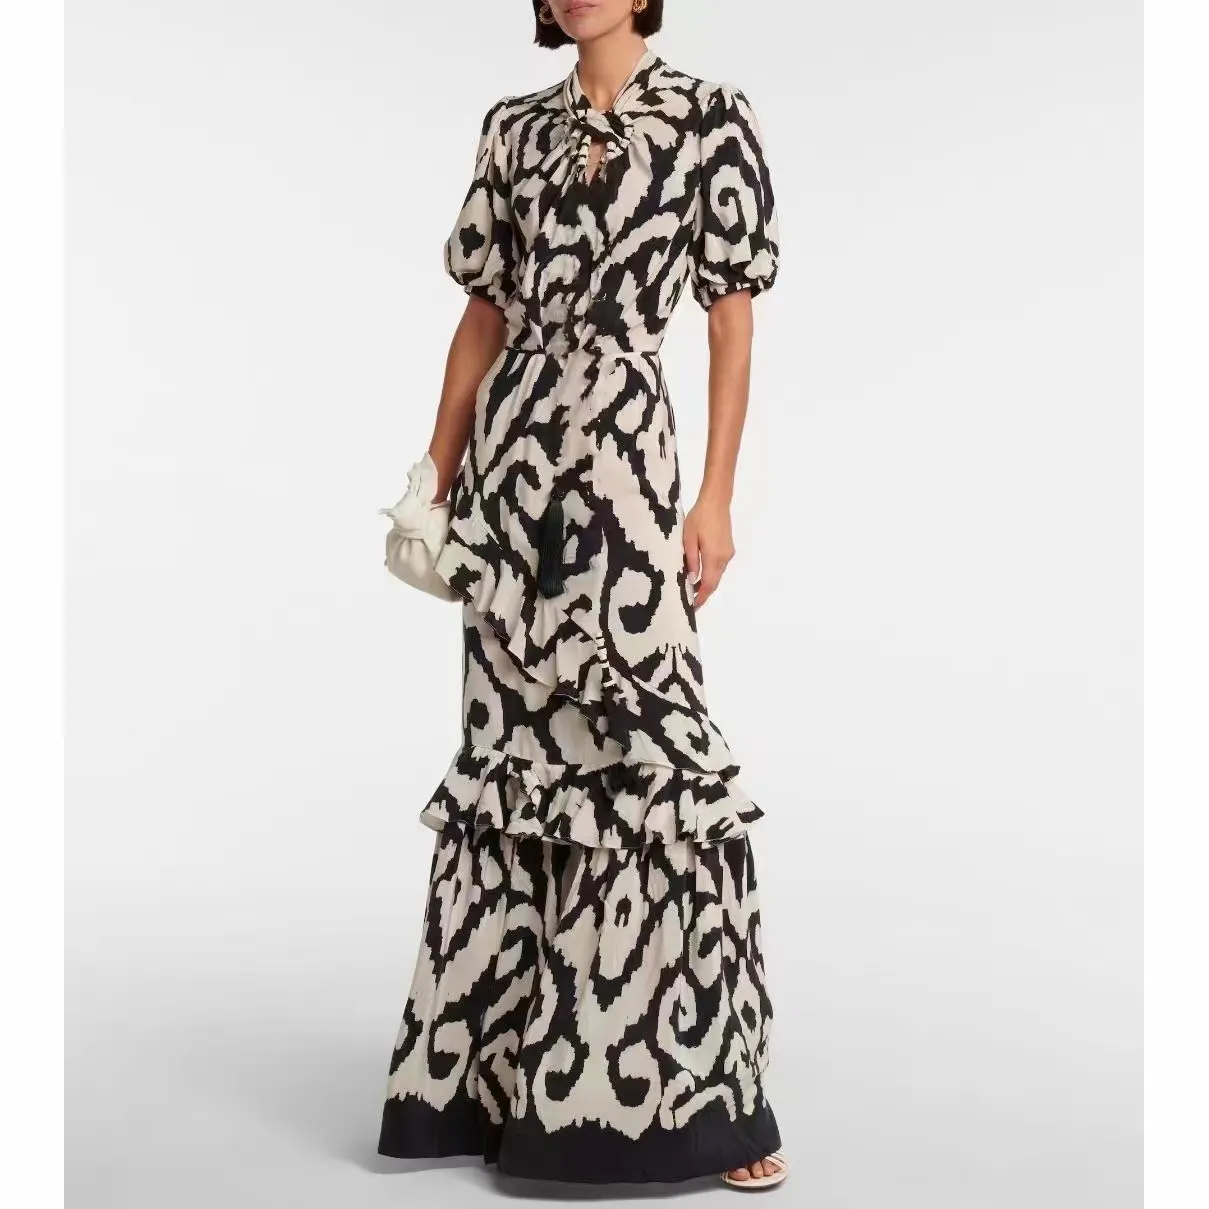 A7207 Summer Chiffon Short Sleeve Maxi Casual Plus Size Printed Woman Dress